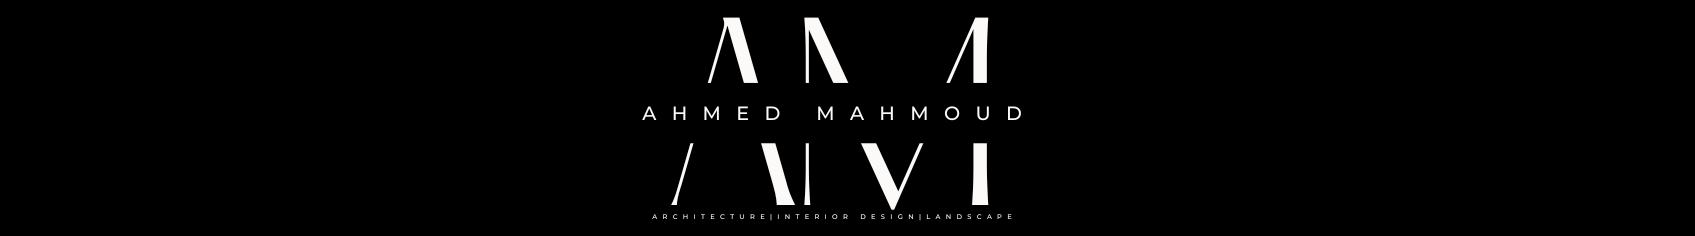 Ahmed Mahmoud's profile banner